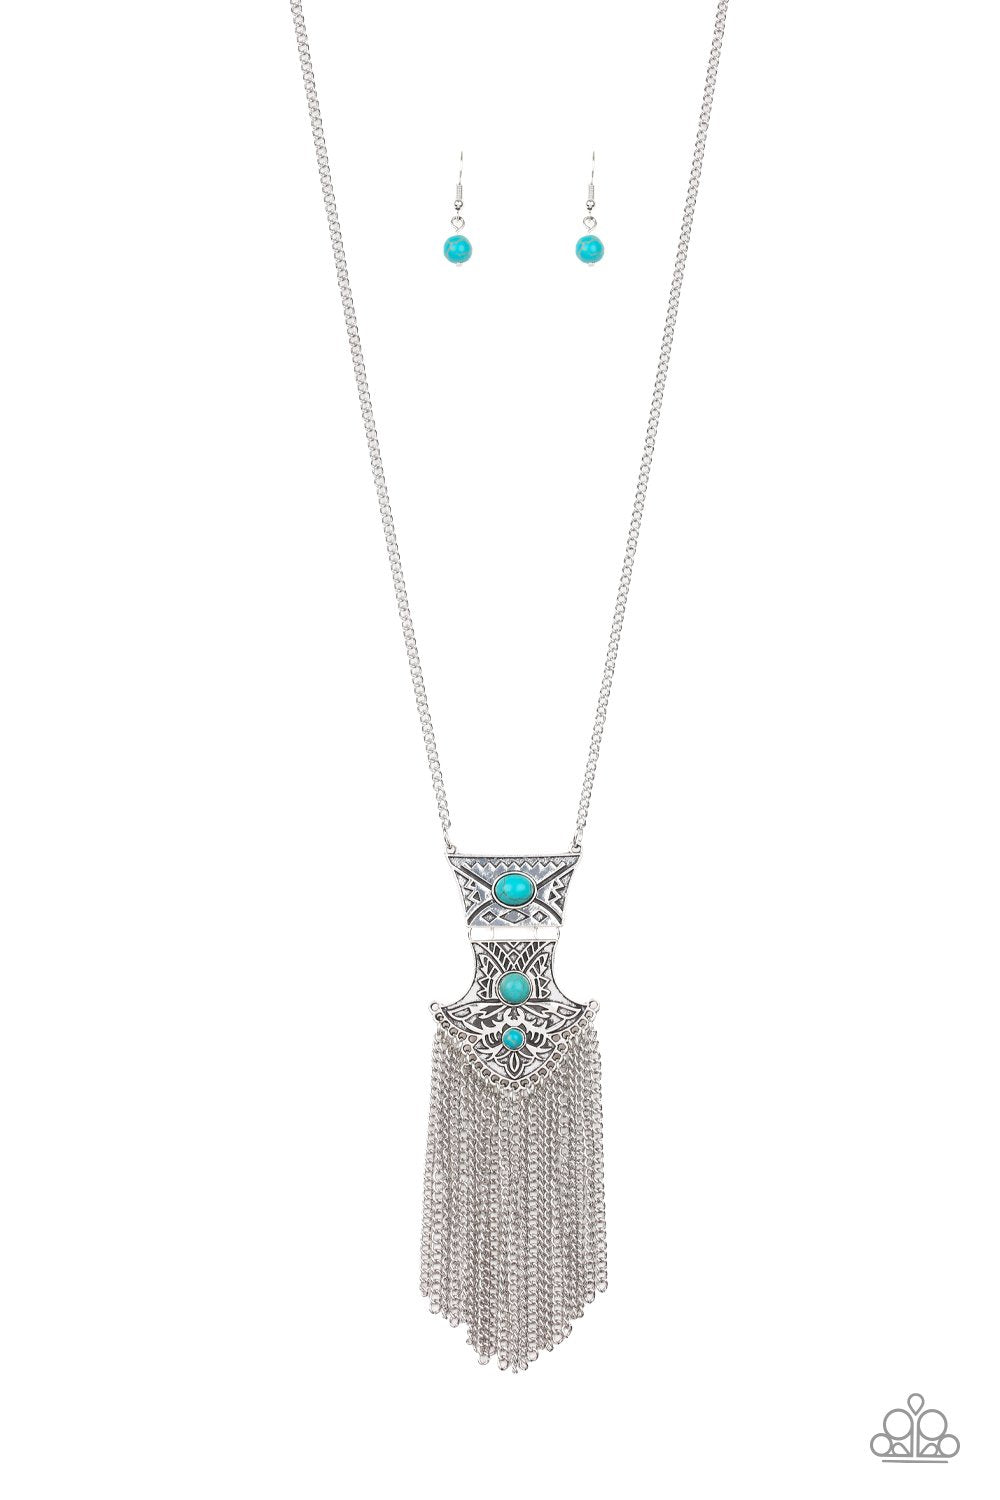 Totem Tassel Blue Necklace freeshipping - JewLz4u Gemstone Gallery